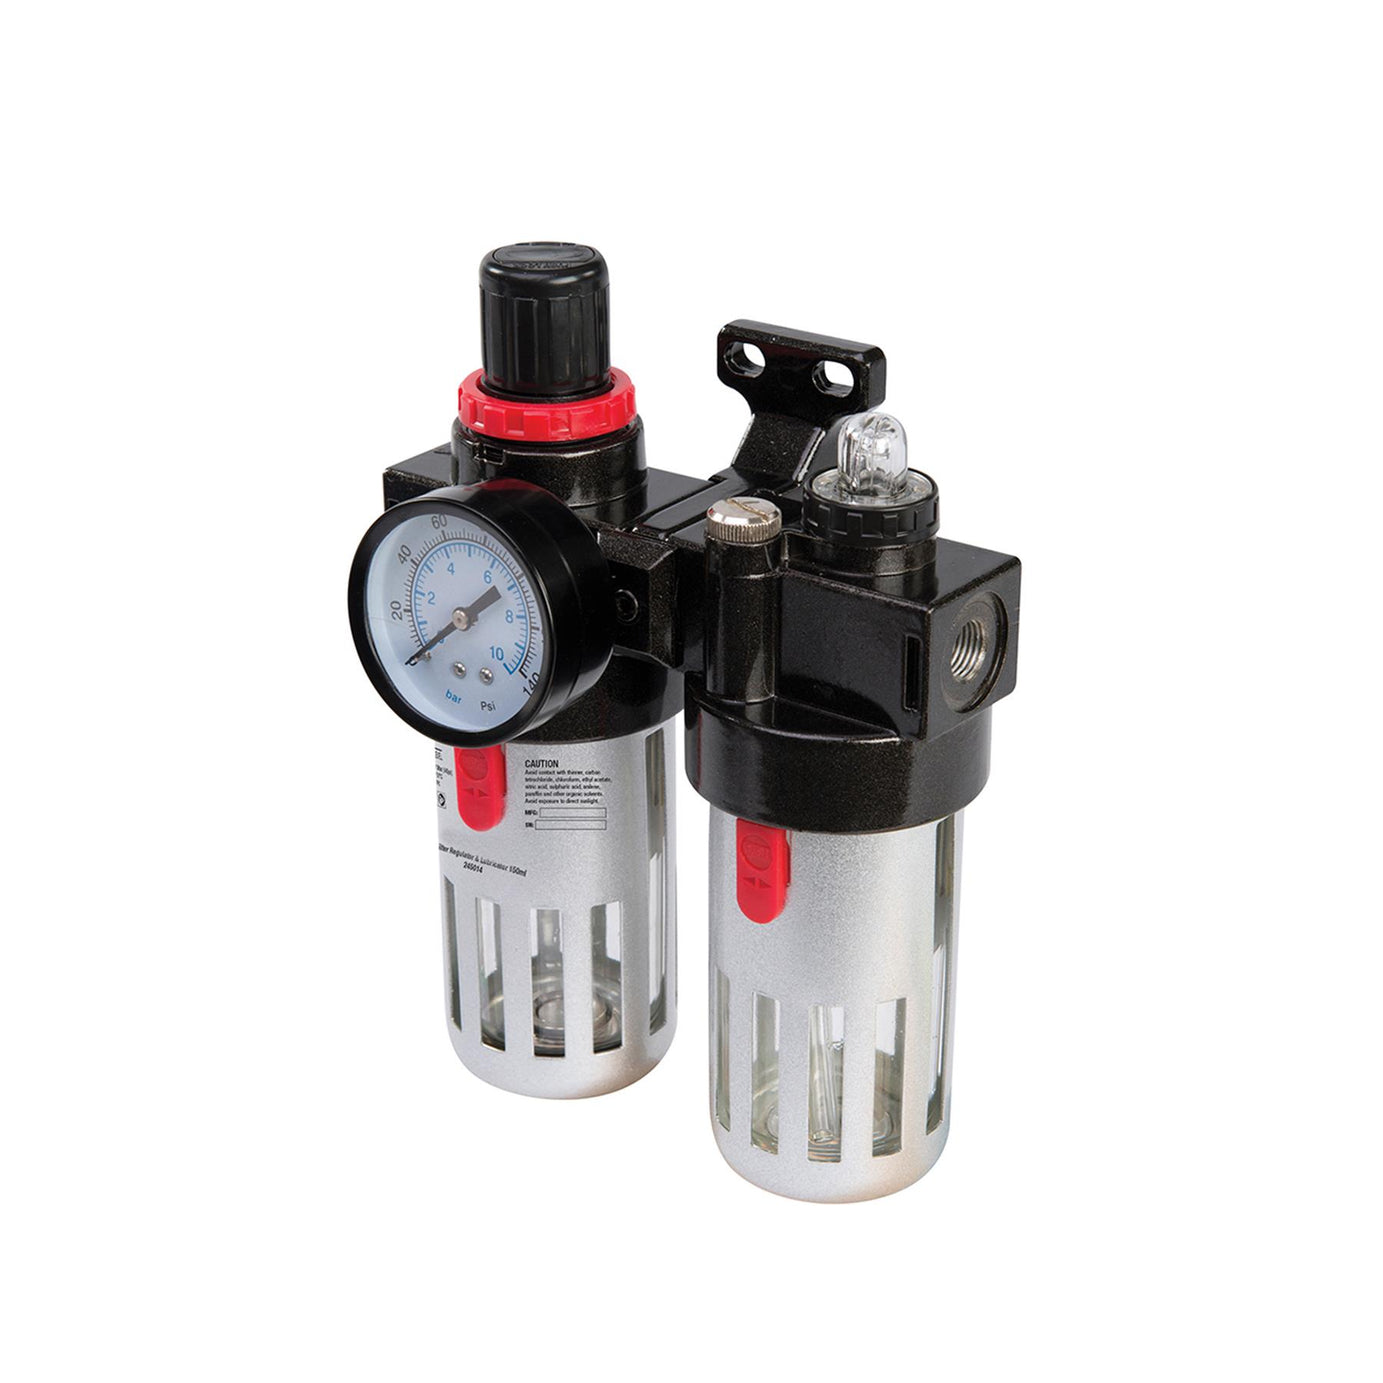 Air Filter Regulator & Lubricator Capacity 150ml Adjustable Pressure Range